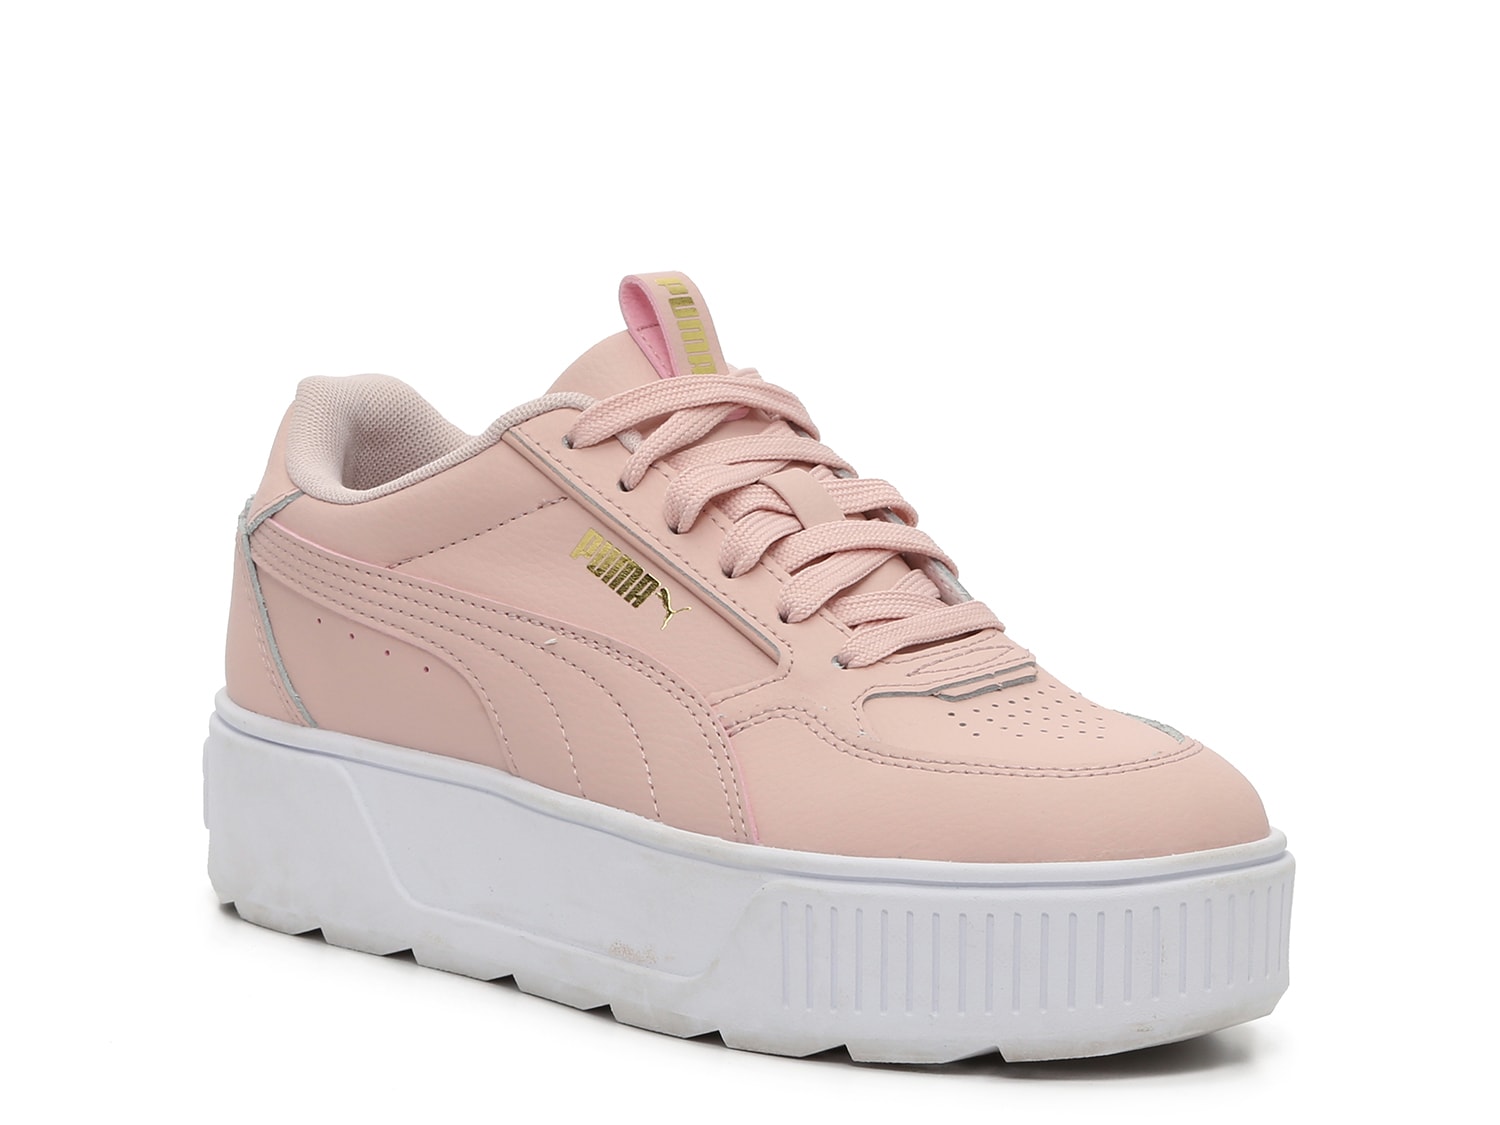 Puma Karmen Rebelle Sneaker - Women's - Shipping